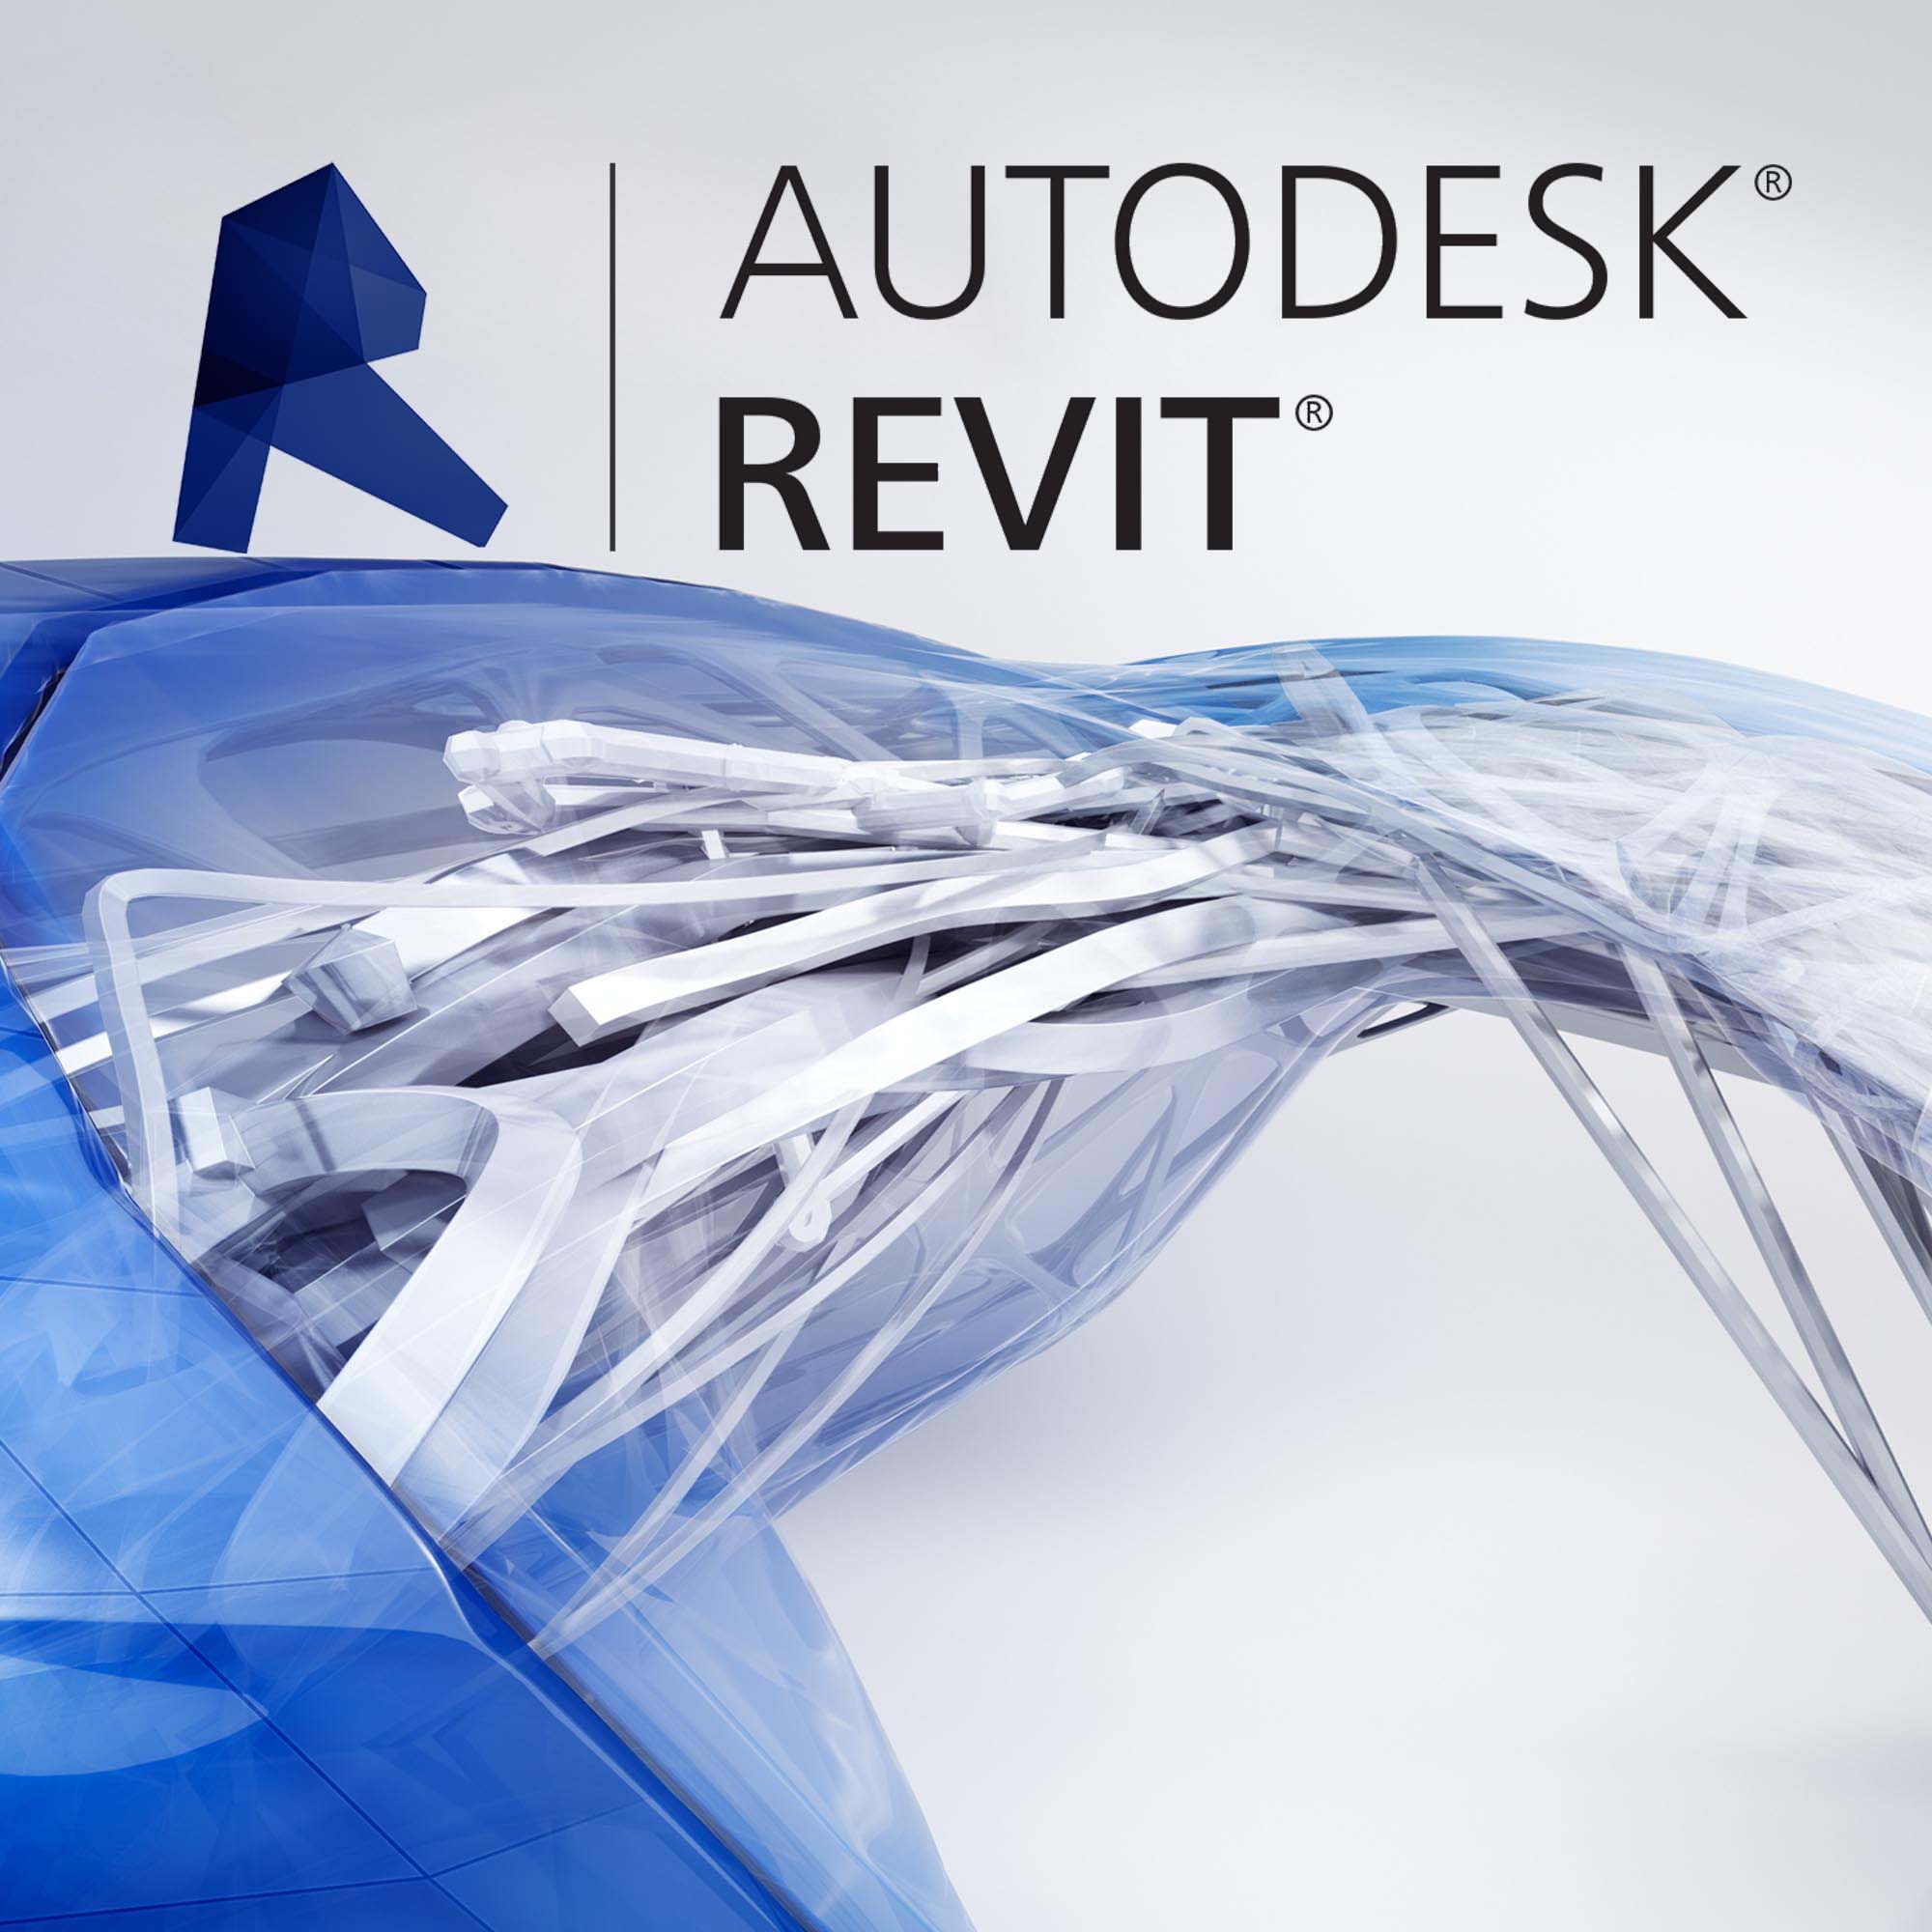 Autodesk architecture